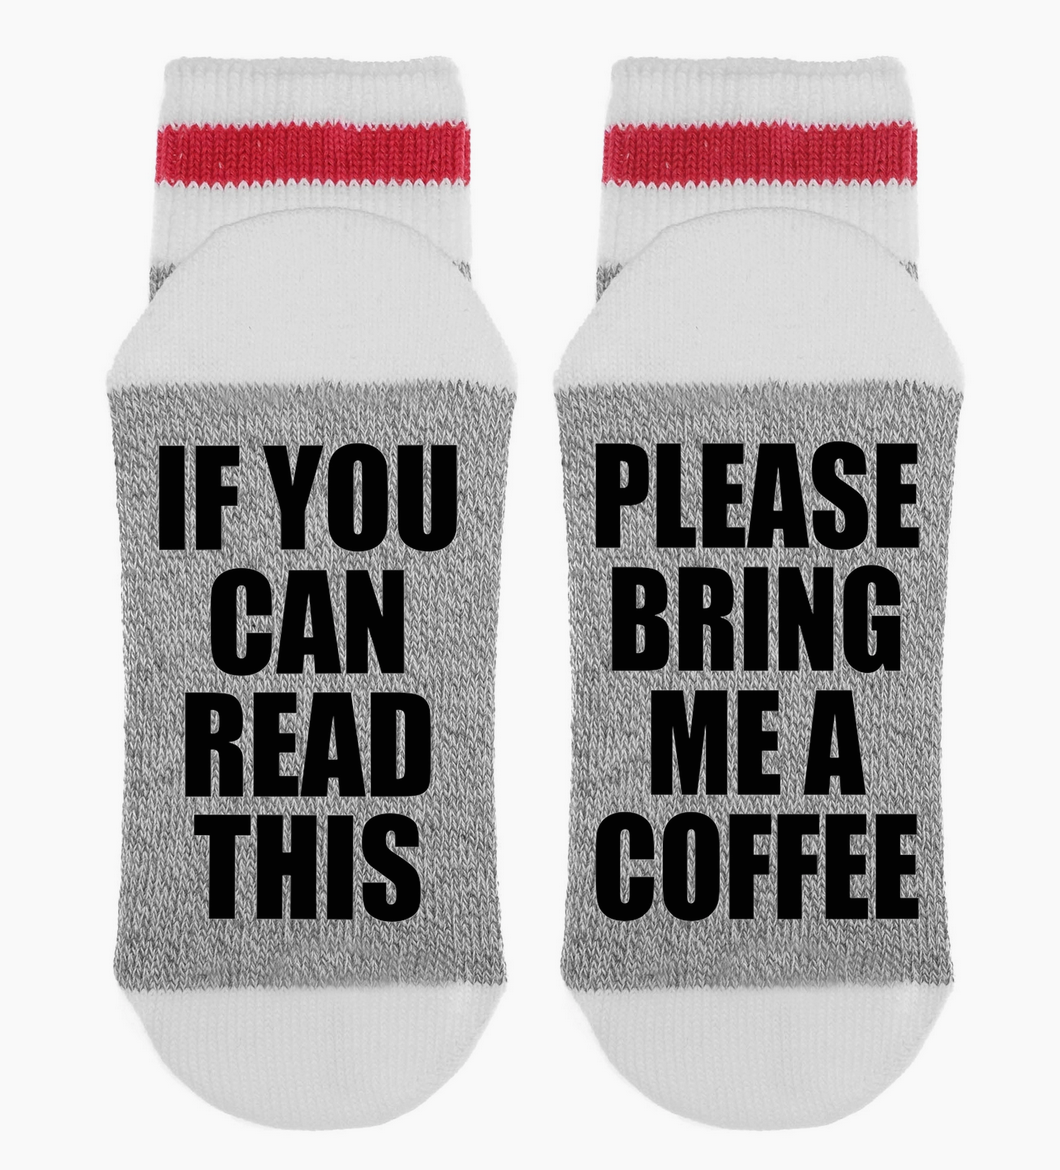 The Bring Me Coffee Socks